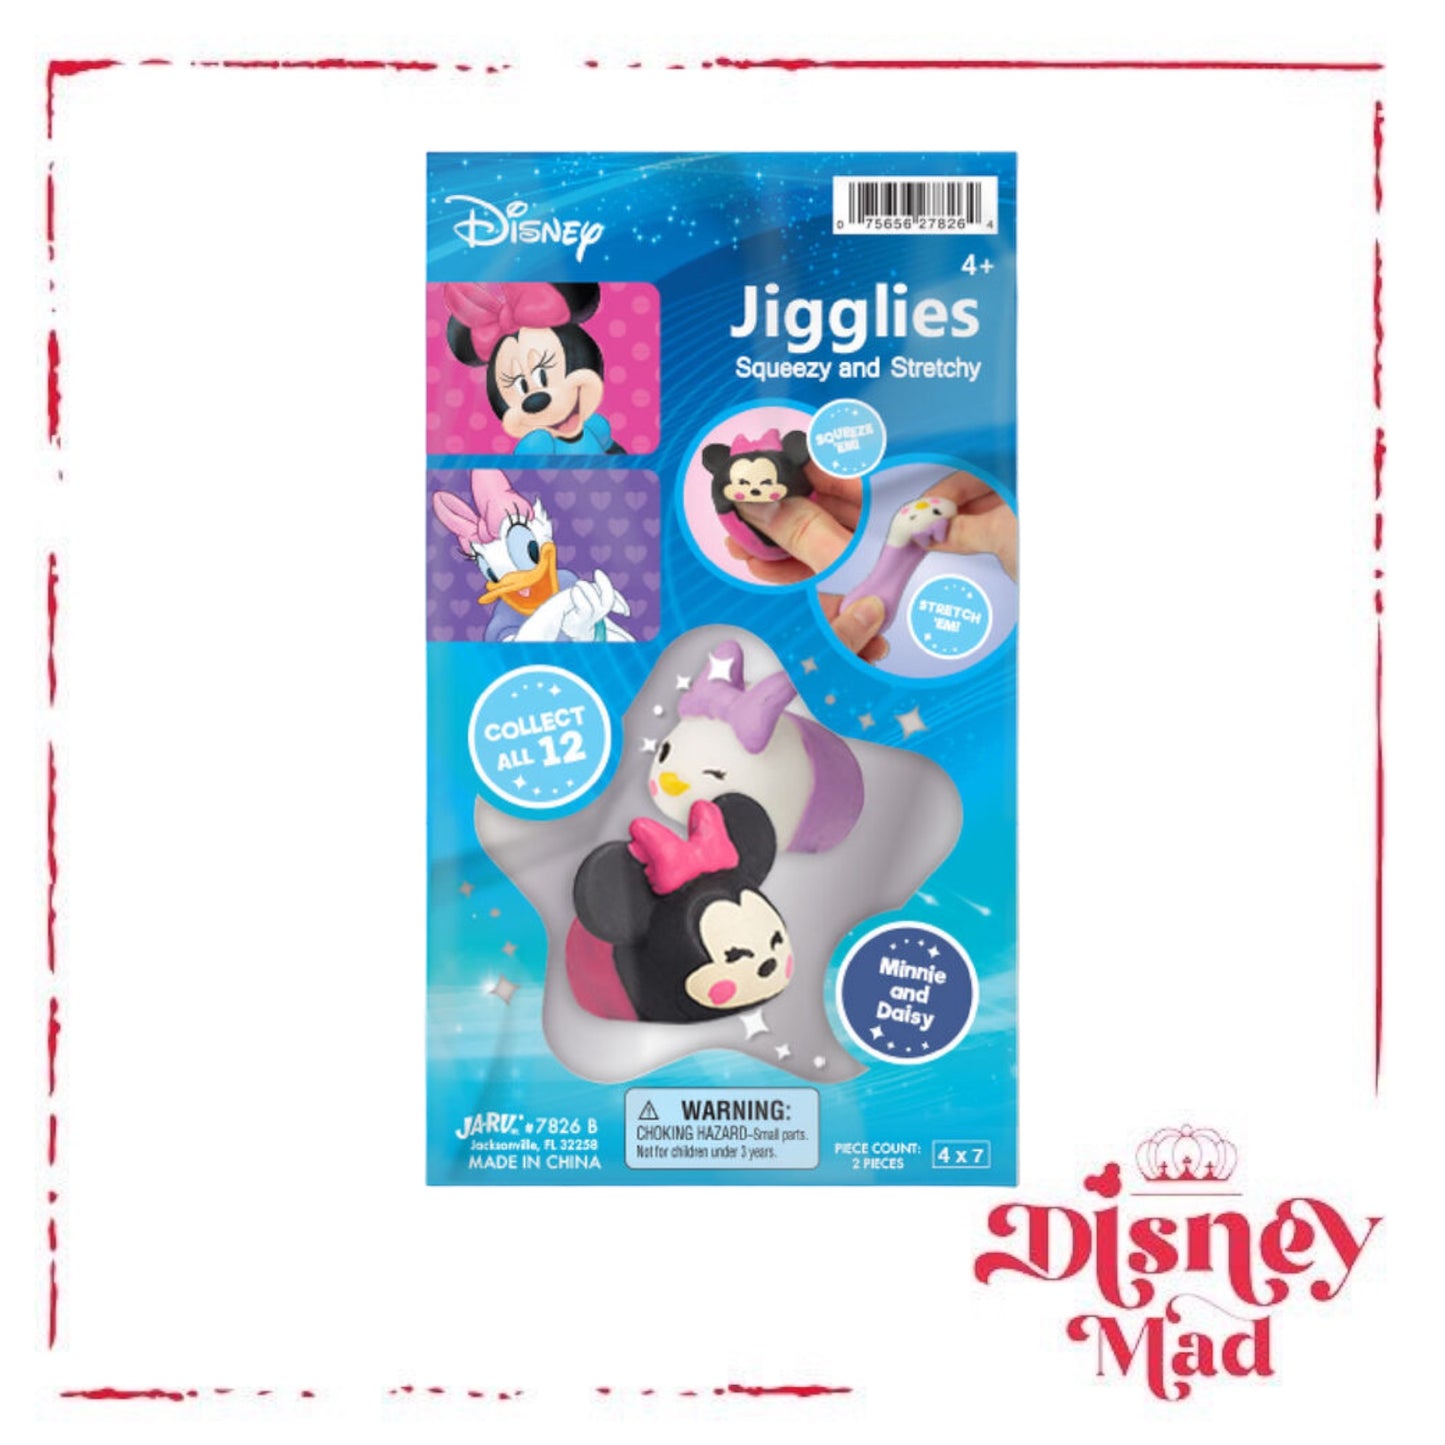 Disney Jigglies 2 Pack - Minnie and Daisy